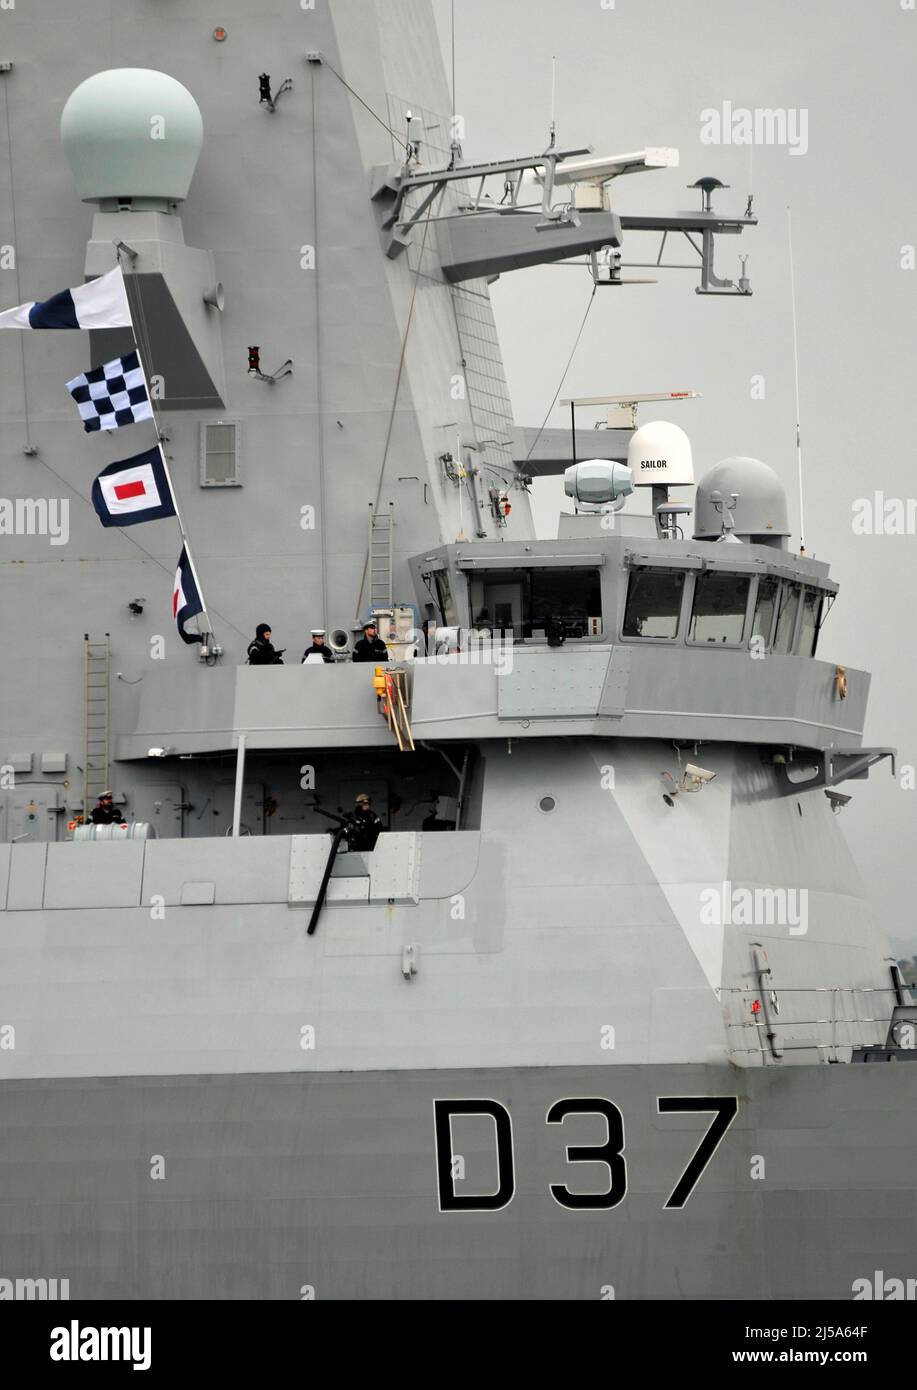 AJAXNETPHOTO. 30TH. MAI 2014.PORTSMOUTH, ENGLAND. - ZERSTÖRER HMS DUNCAN VOM TYP 45 KOMMT IN DEN HAFEN. FOTO: JONATHAN EASTLAND/AJAX REF:DTH143005 9243 Stockfoto